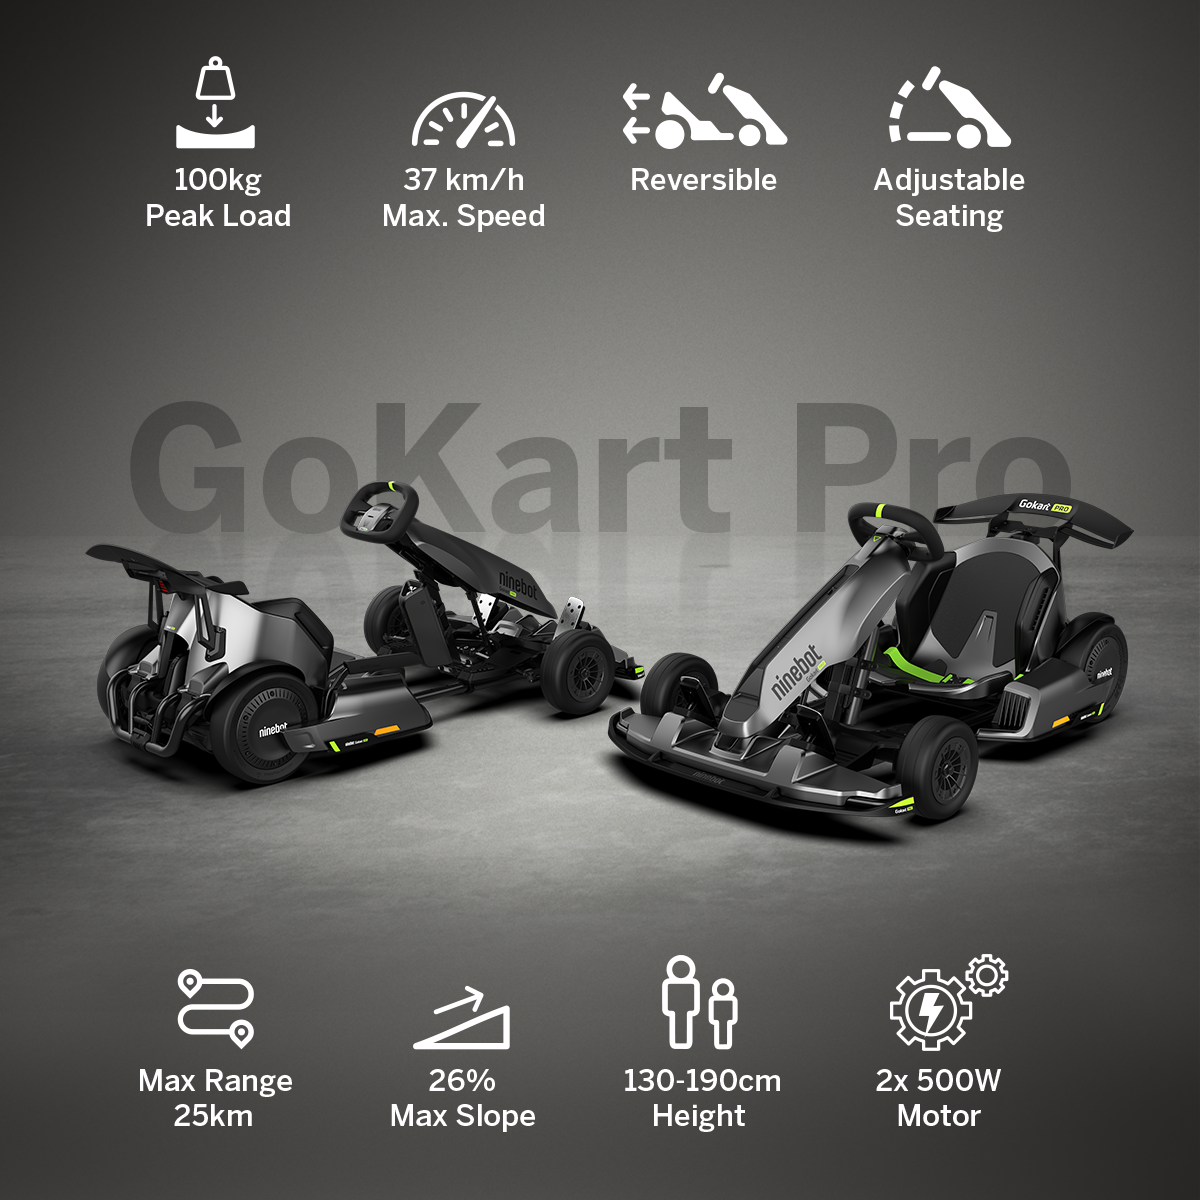 Ninebot Gokart Pro Electrico